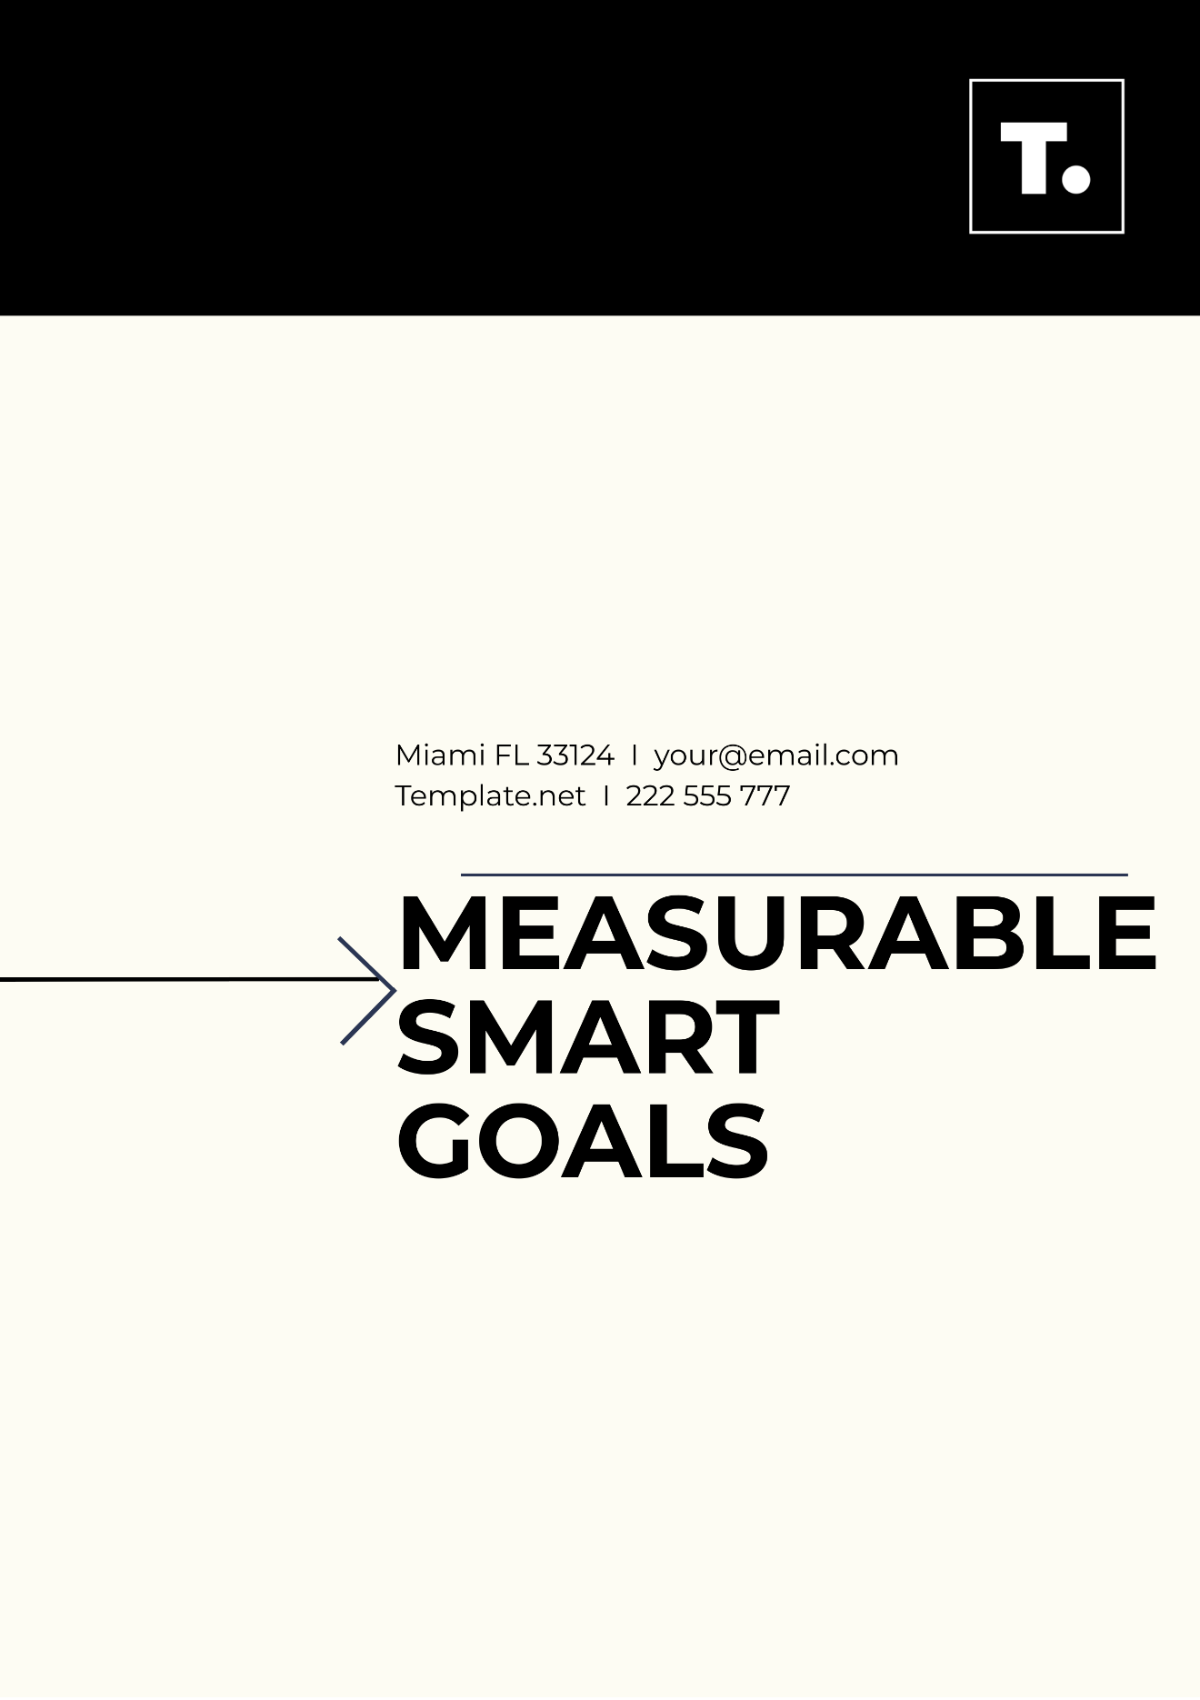 Measurable SMART Goals Template